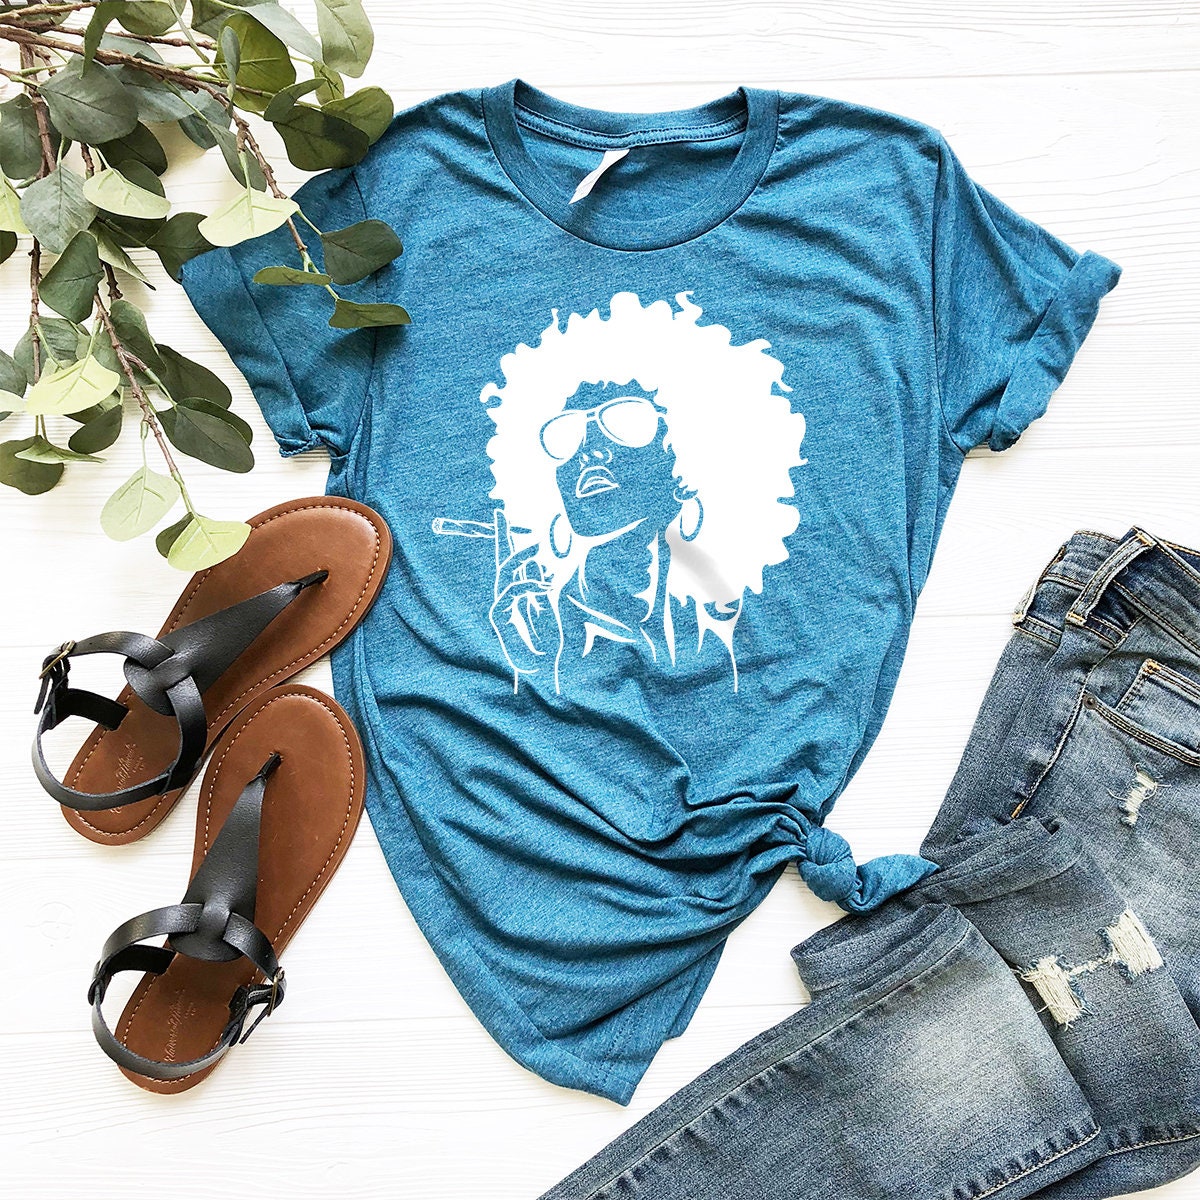 Marijuana Shirt, Weed Shirt, Afro Girl Shirt, Weed Tee, Afro Girl Smoking Shirt, Black Women Weed shirt, 420-Weed Shirt - Fastdeliverytees.com